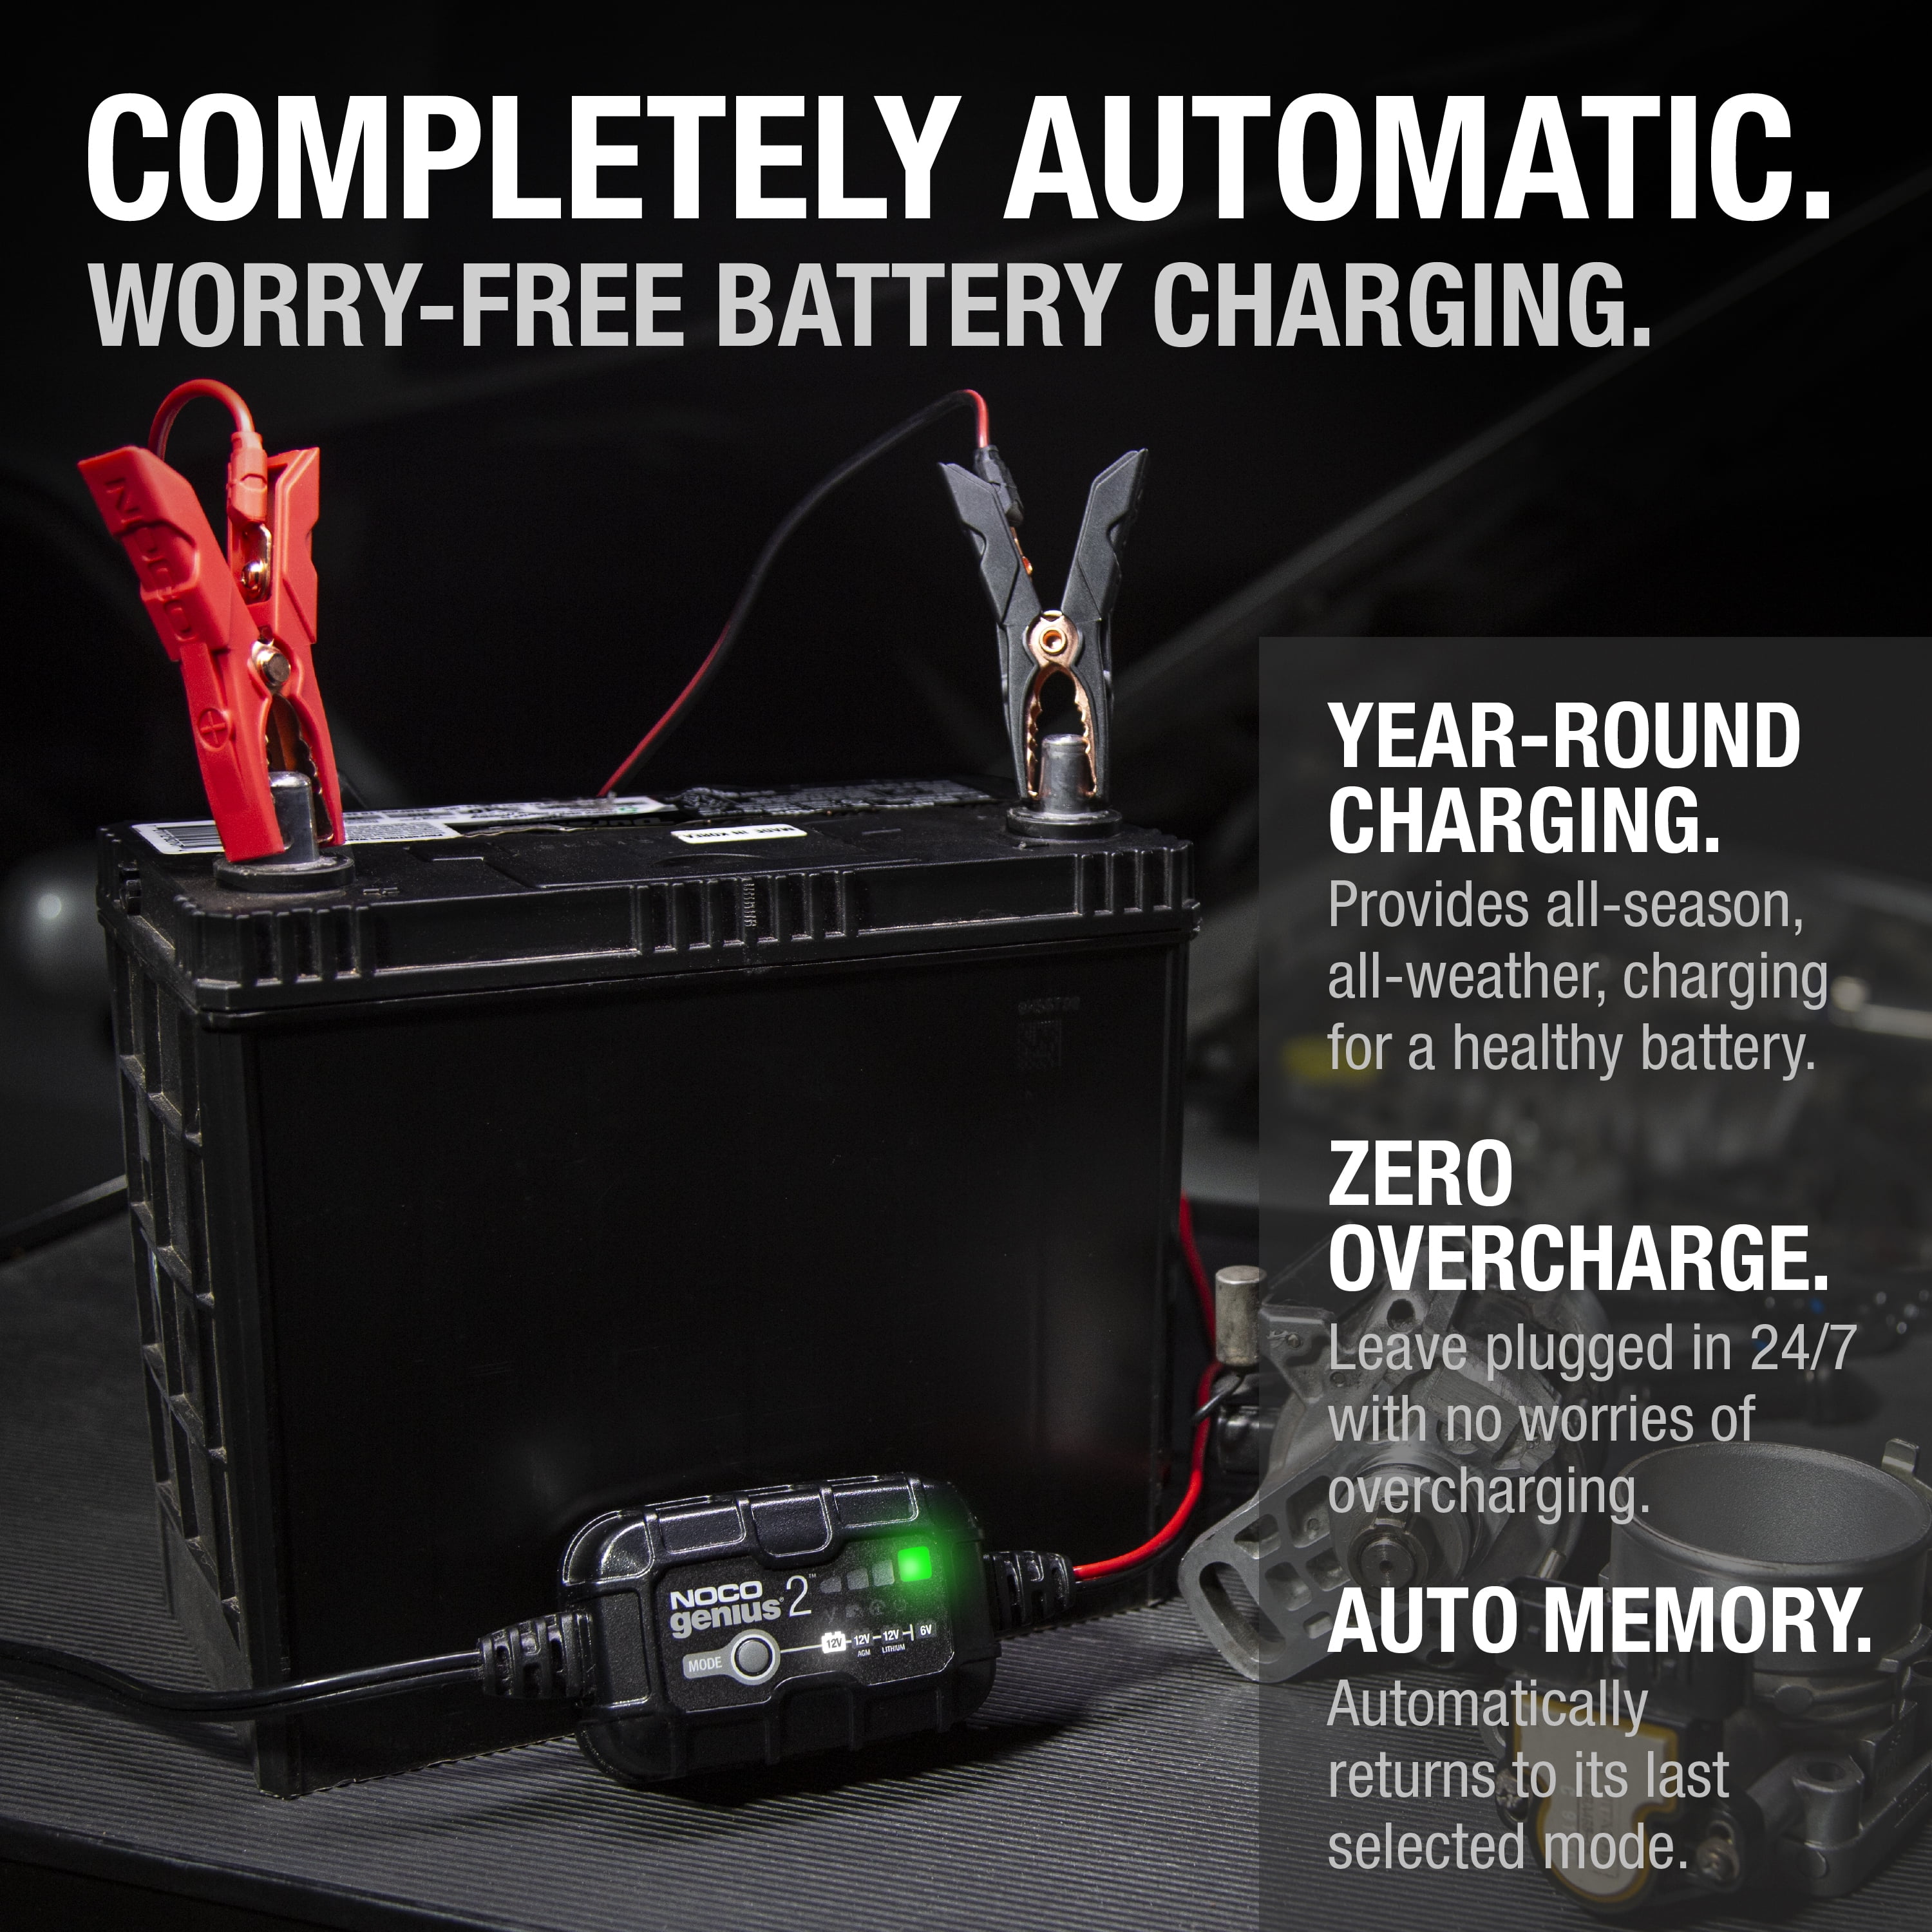 NOCO Company - NOCO GENIUS2X2 6V/12V 2-Bank, 4-Amp Smart Battery